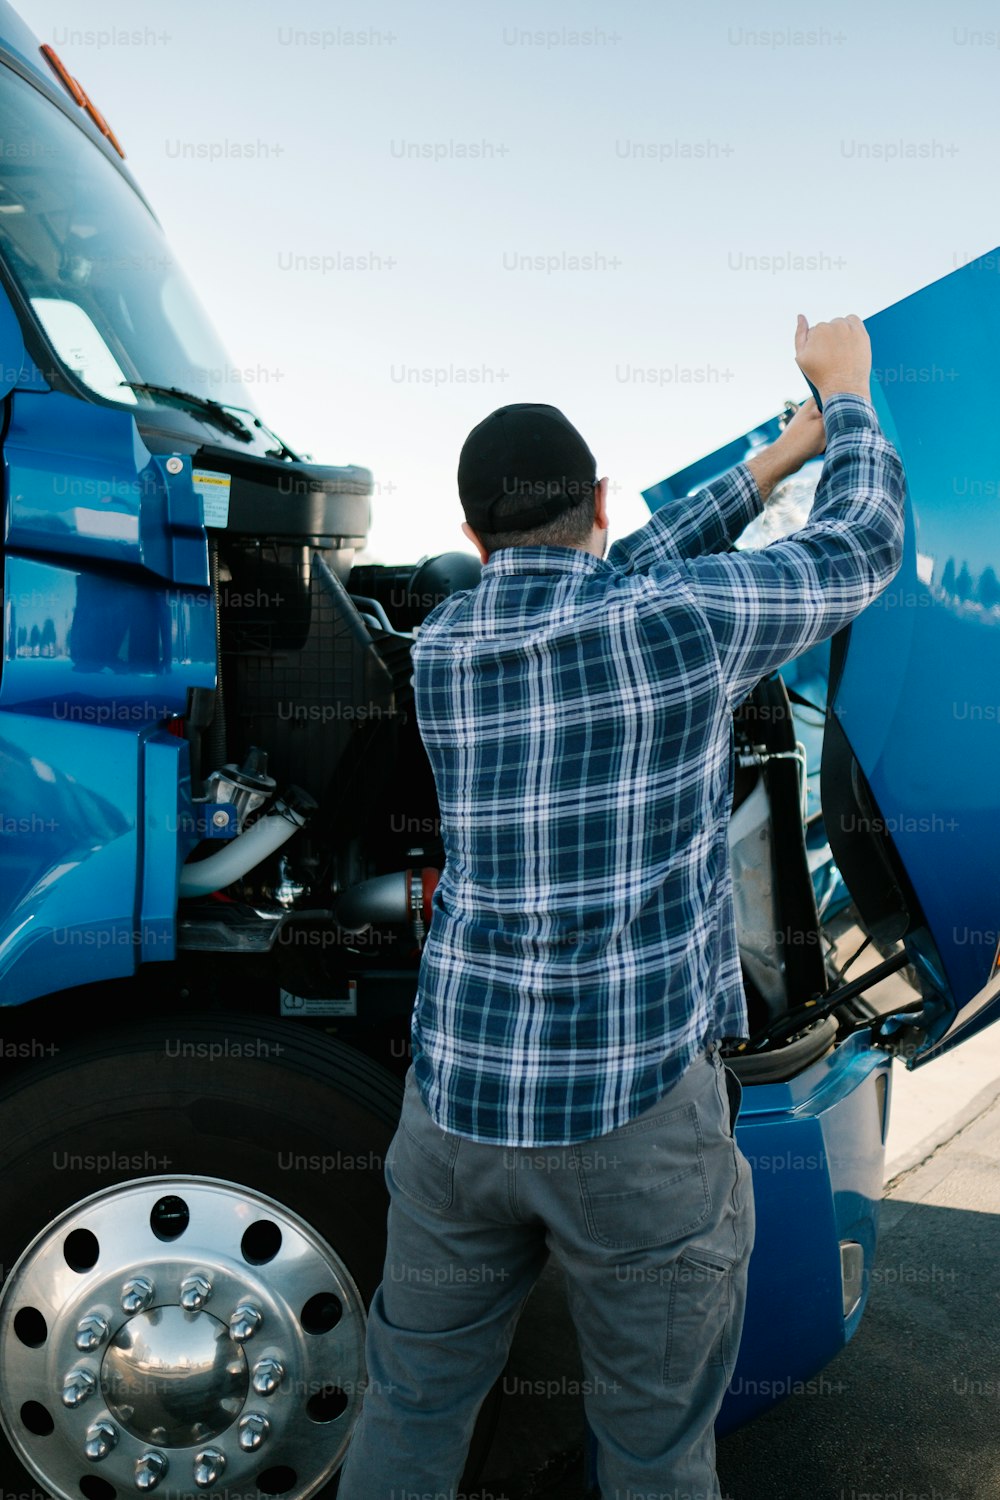 Un hombre parado junto a un camión azul